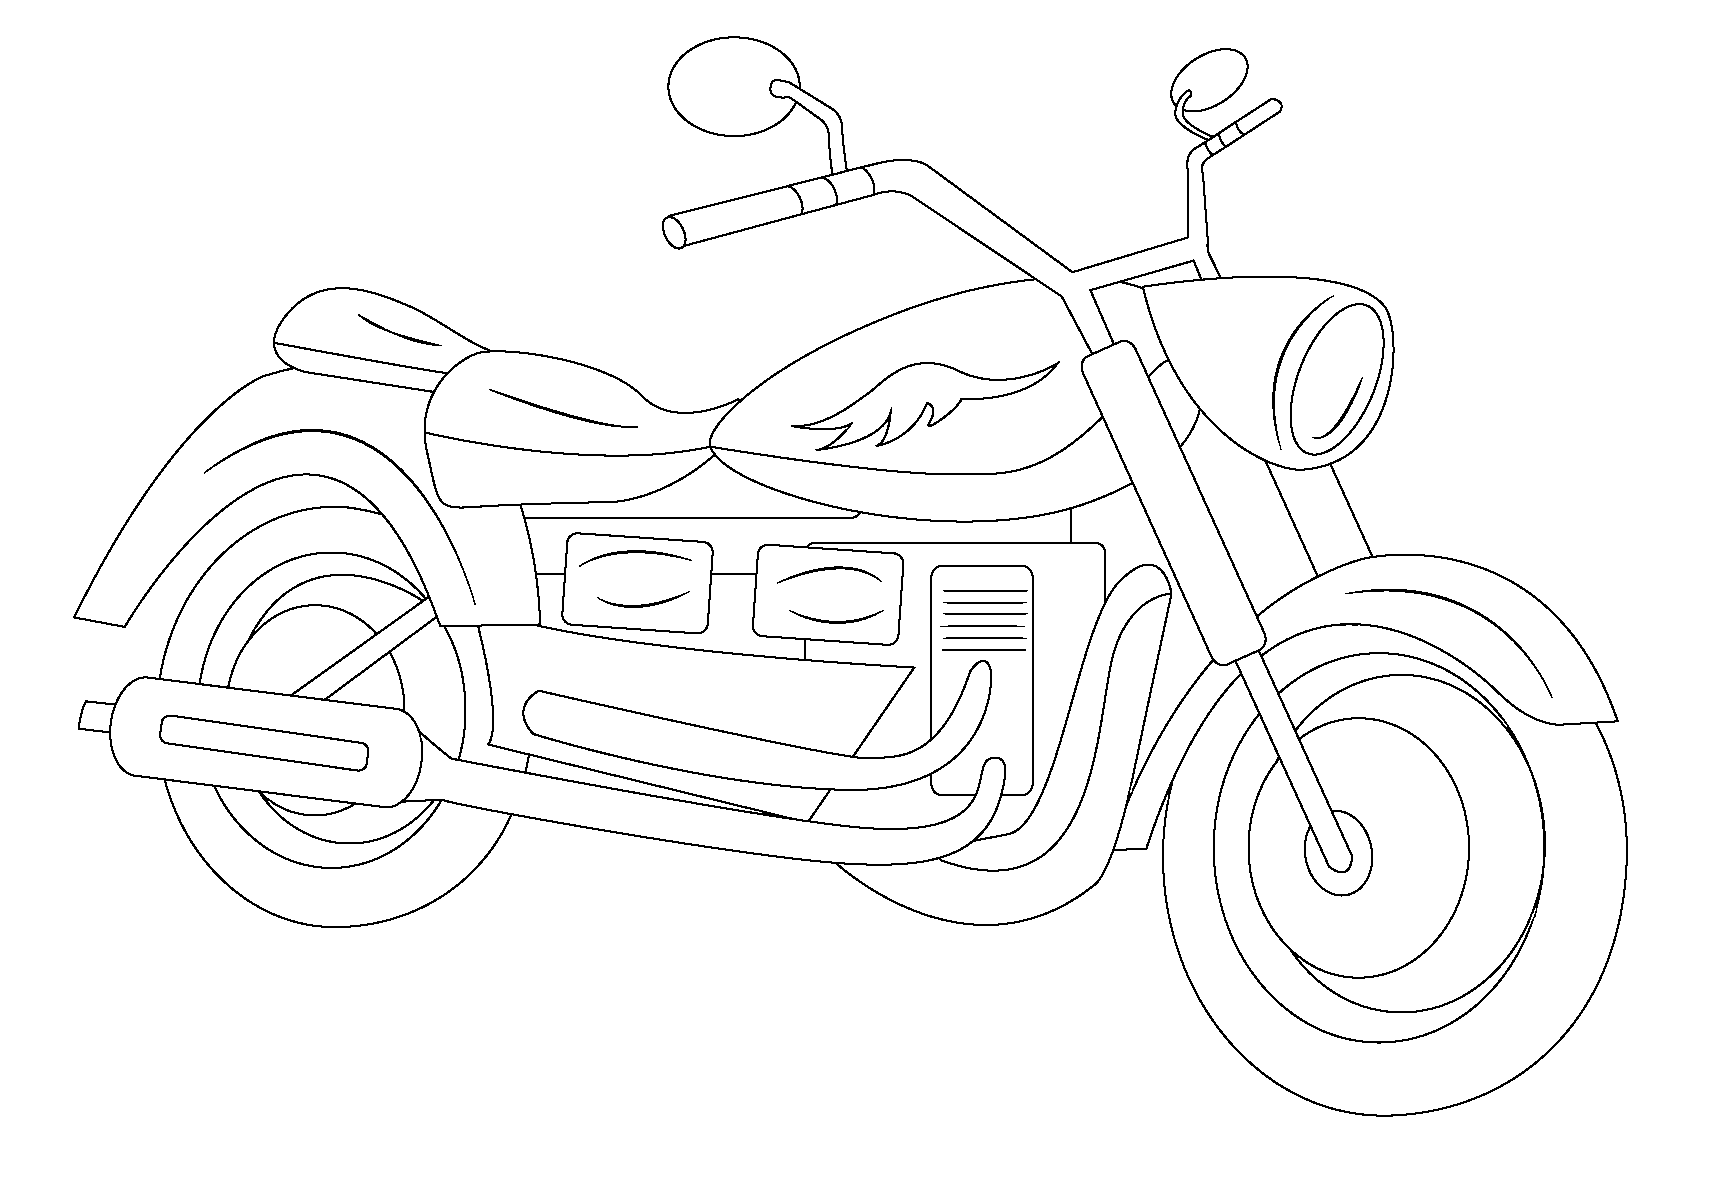 Desenho de Moto de corrida para colorir - Tudodesenhos